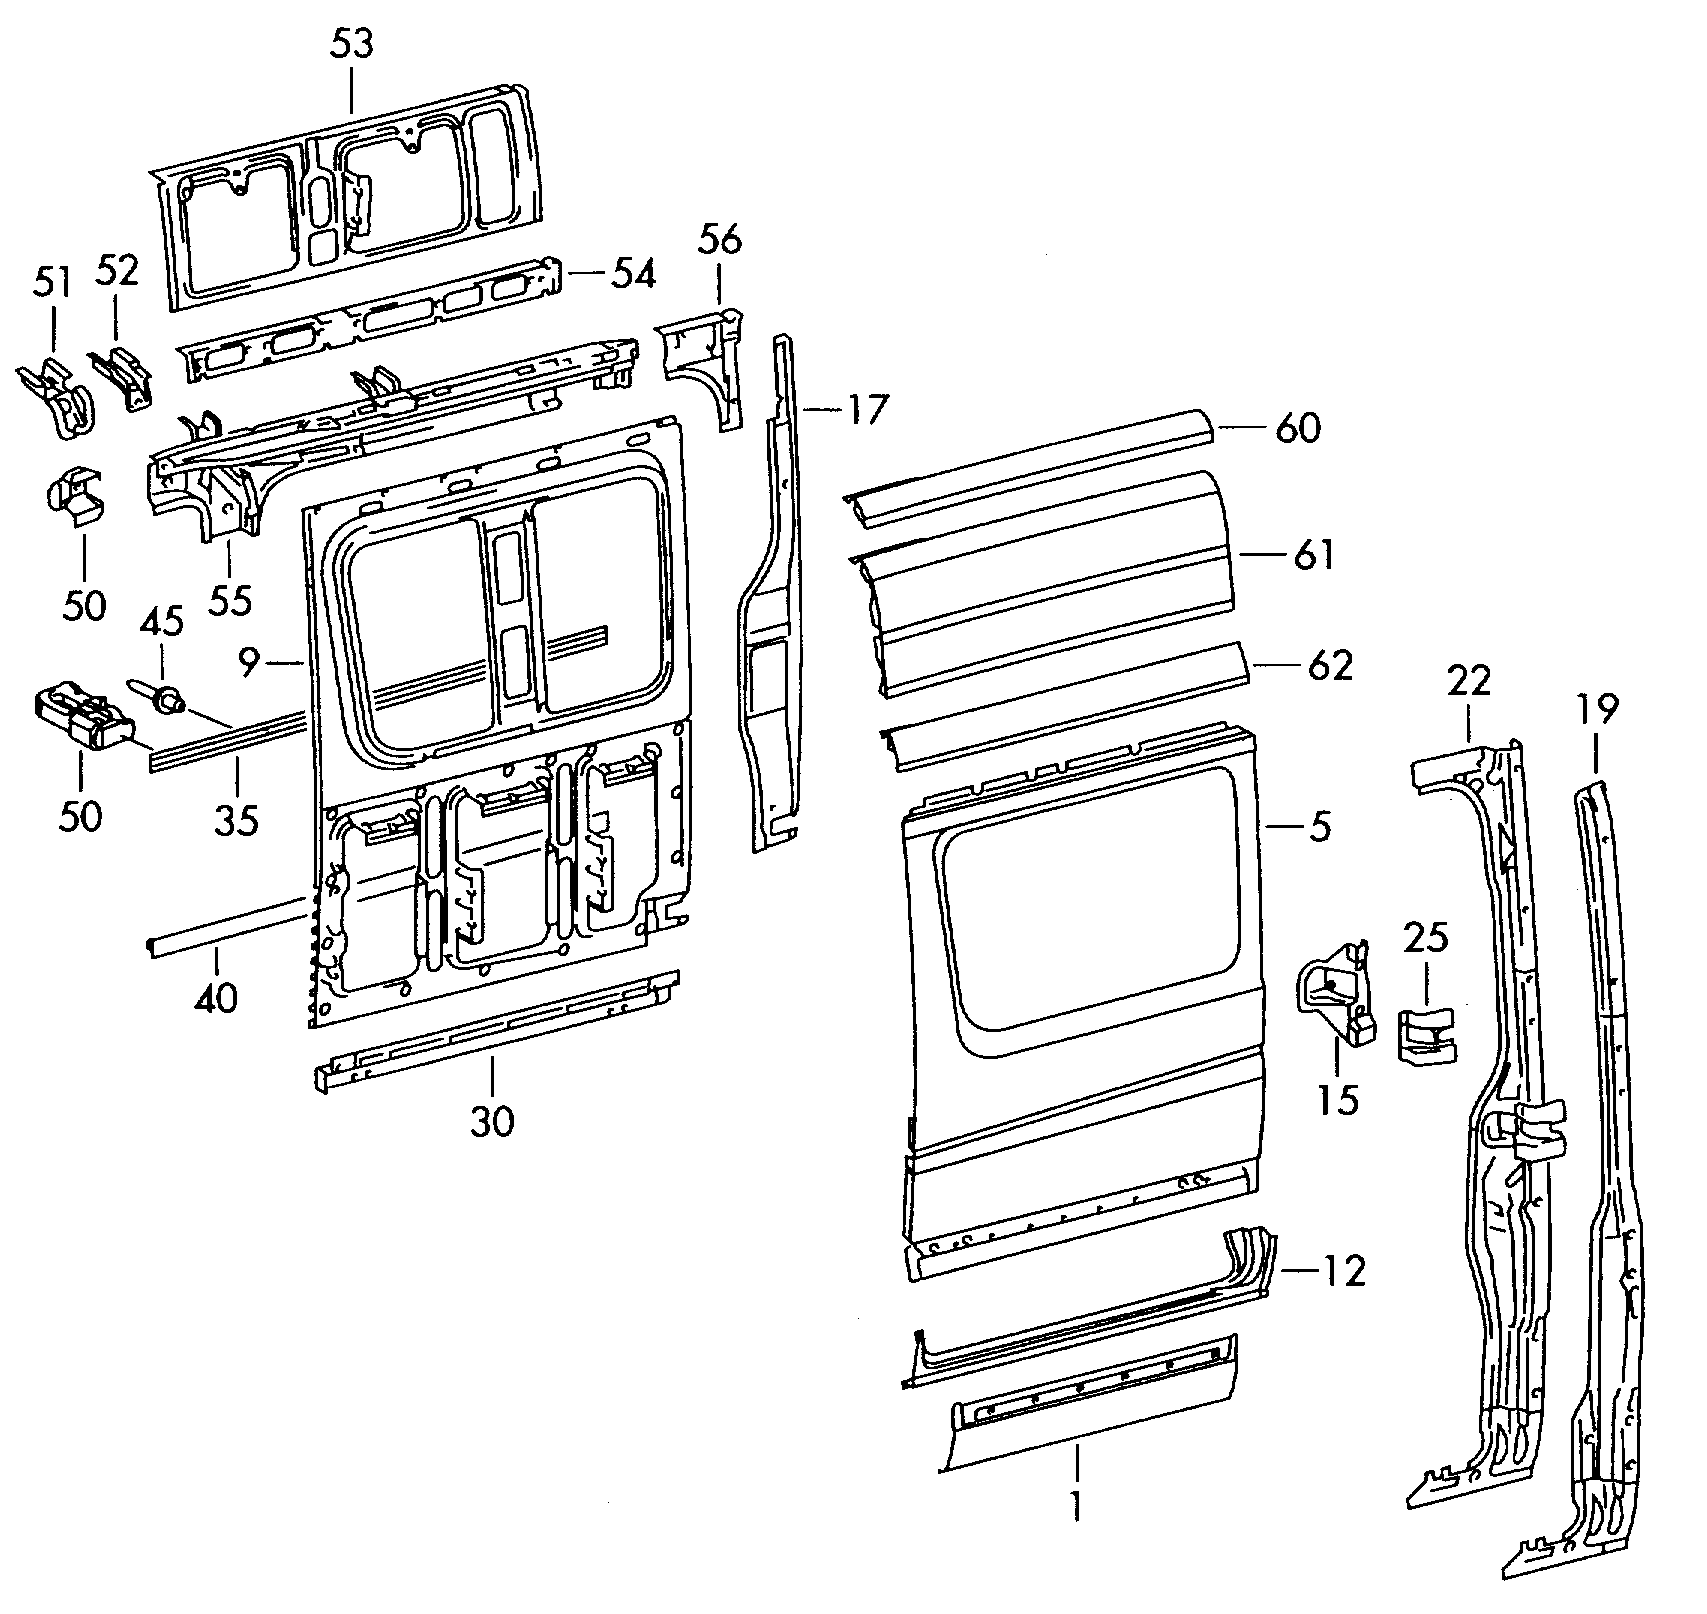 Side partsee workshop manual;<br>body center - Crafter - cr